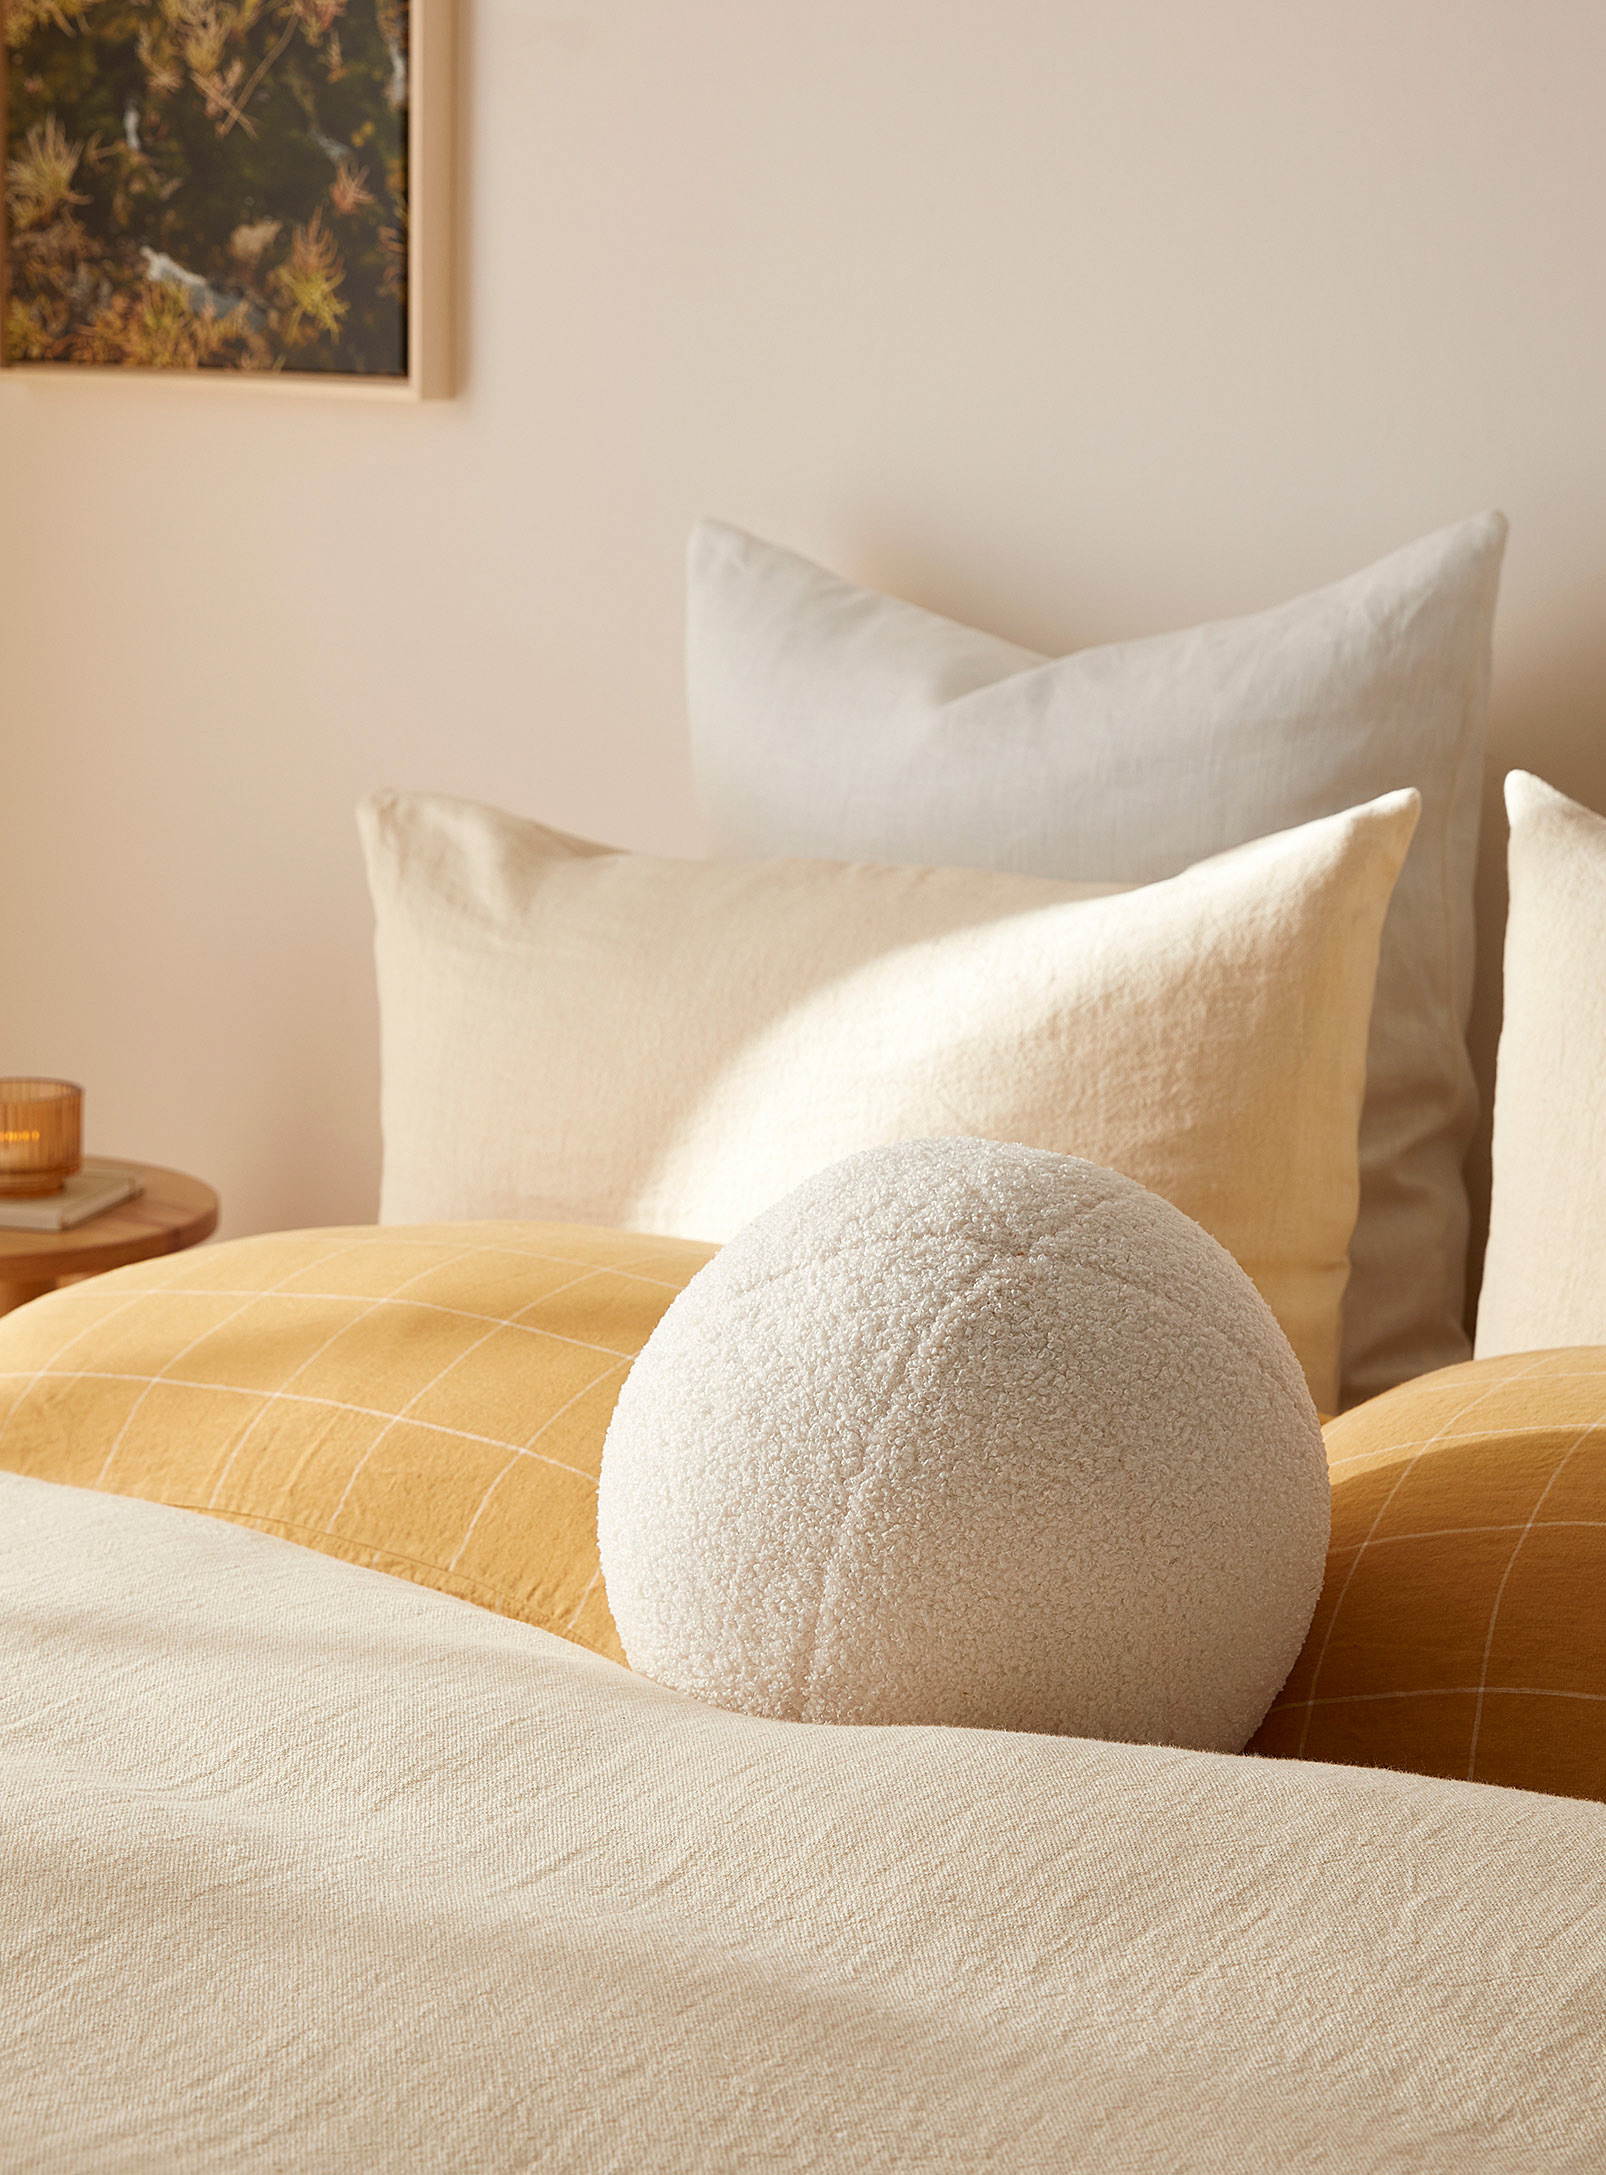 Simons Maison - Ball-shaped high-pile fleece cushion 35 cm in diameter